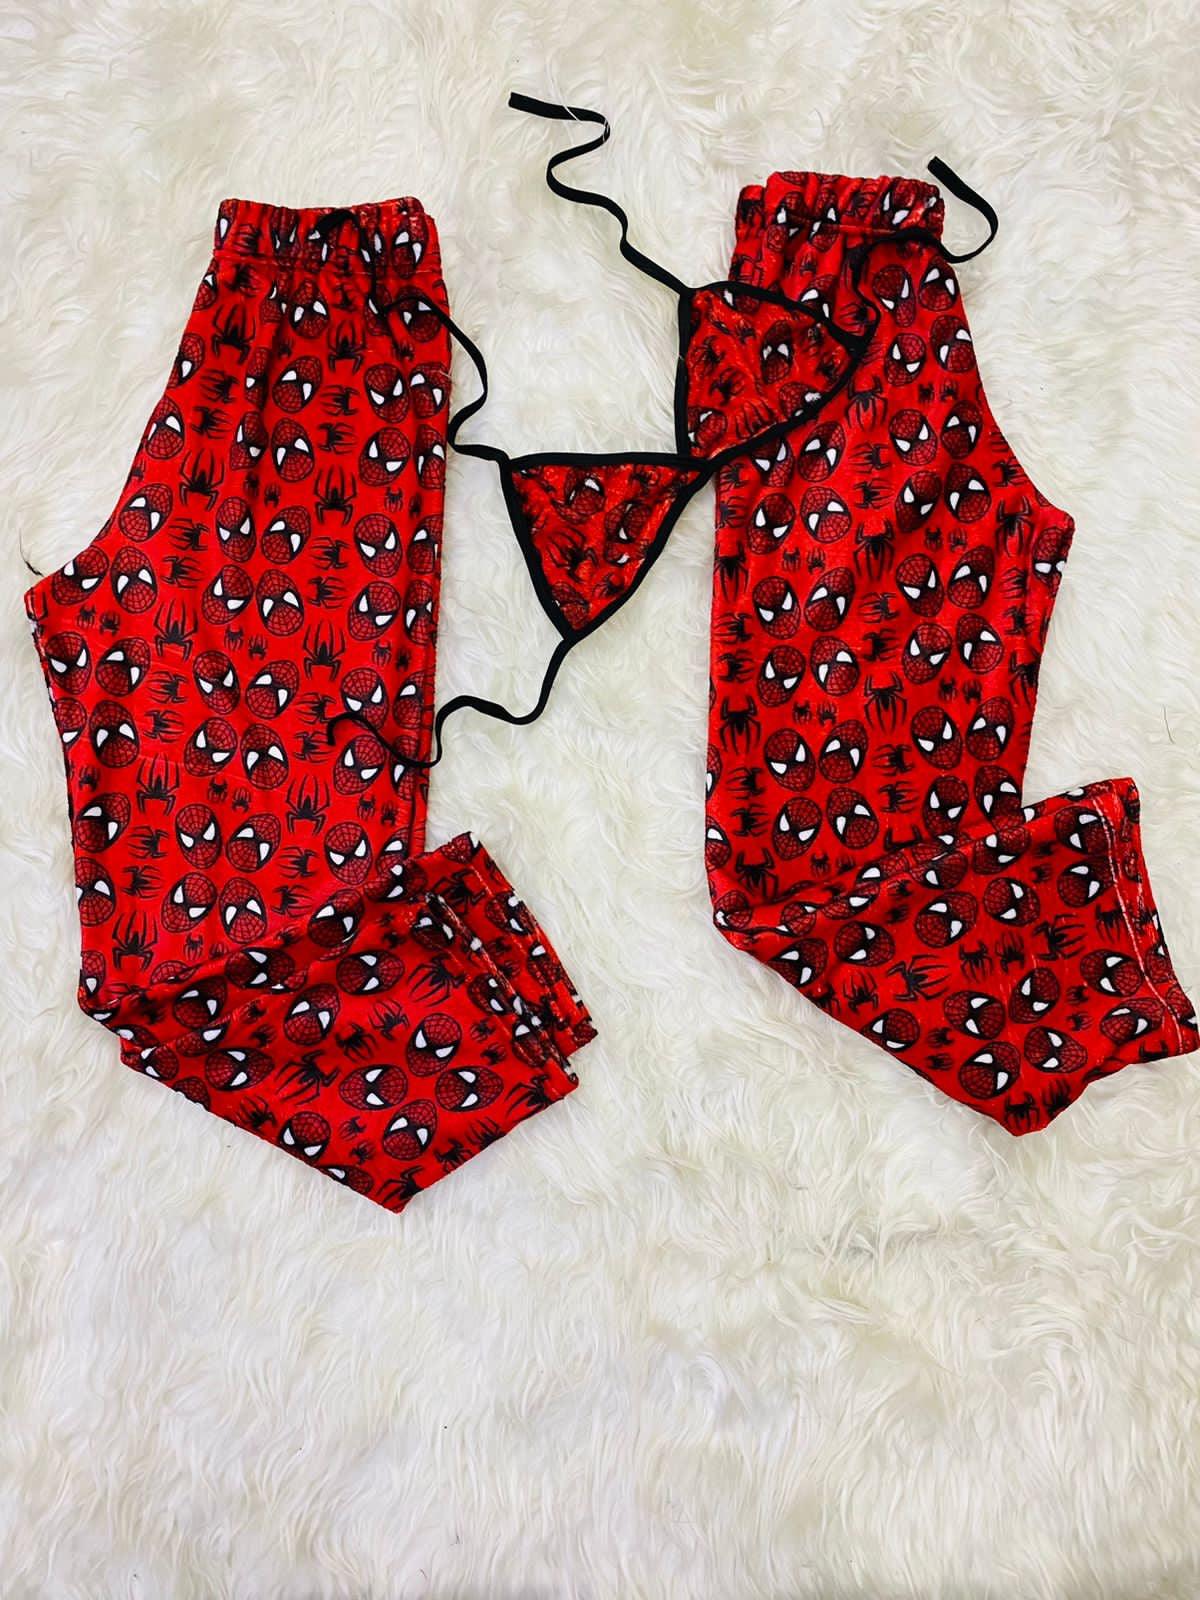 Spider-Man plush pajama duo – Fun underwear